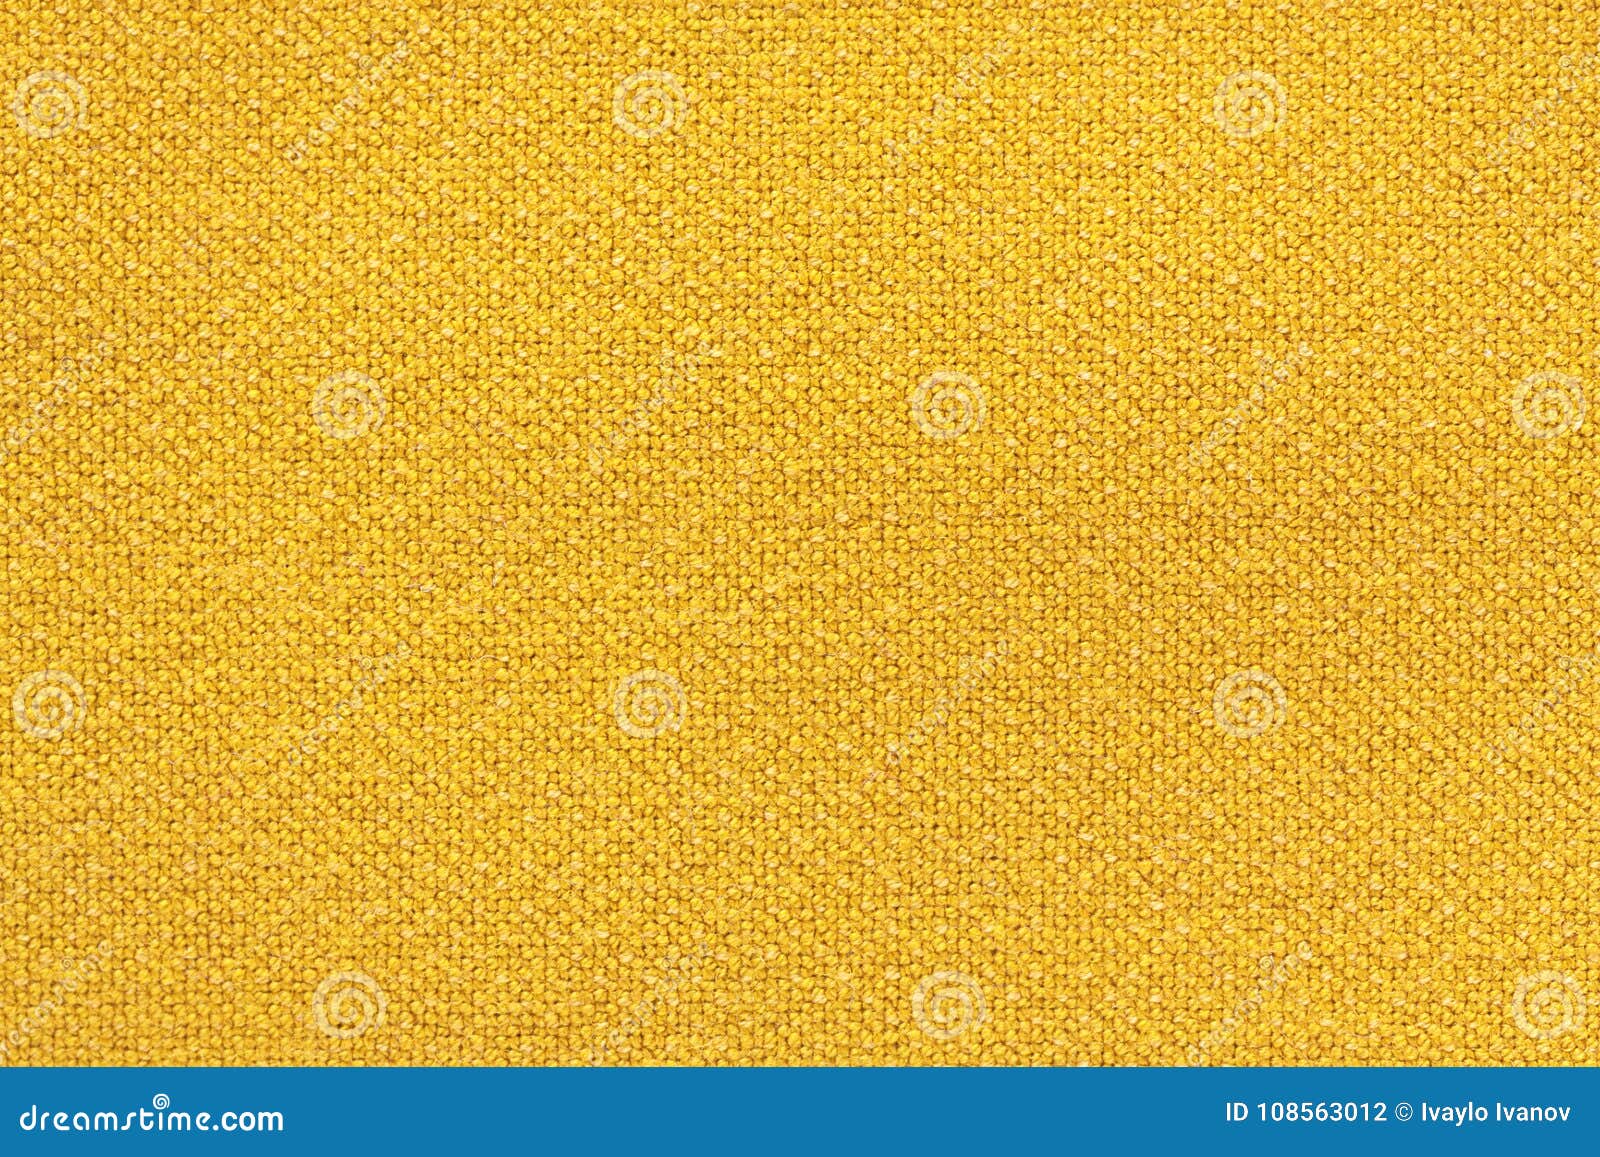 Yellow Carpet Texture